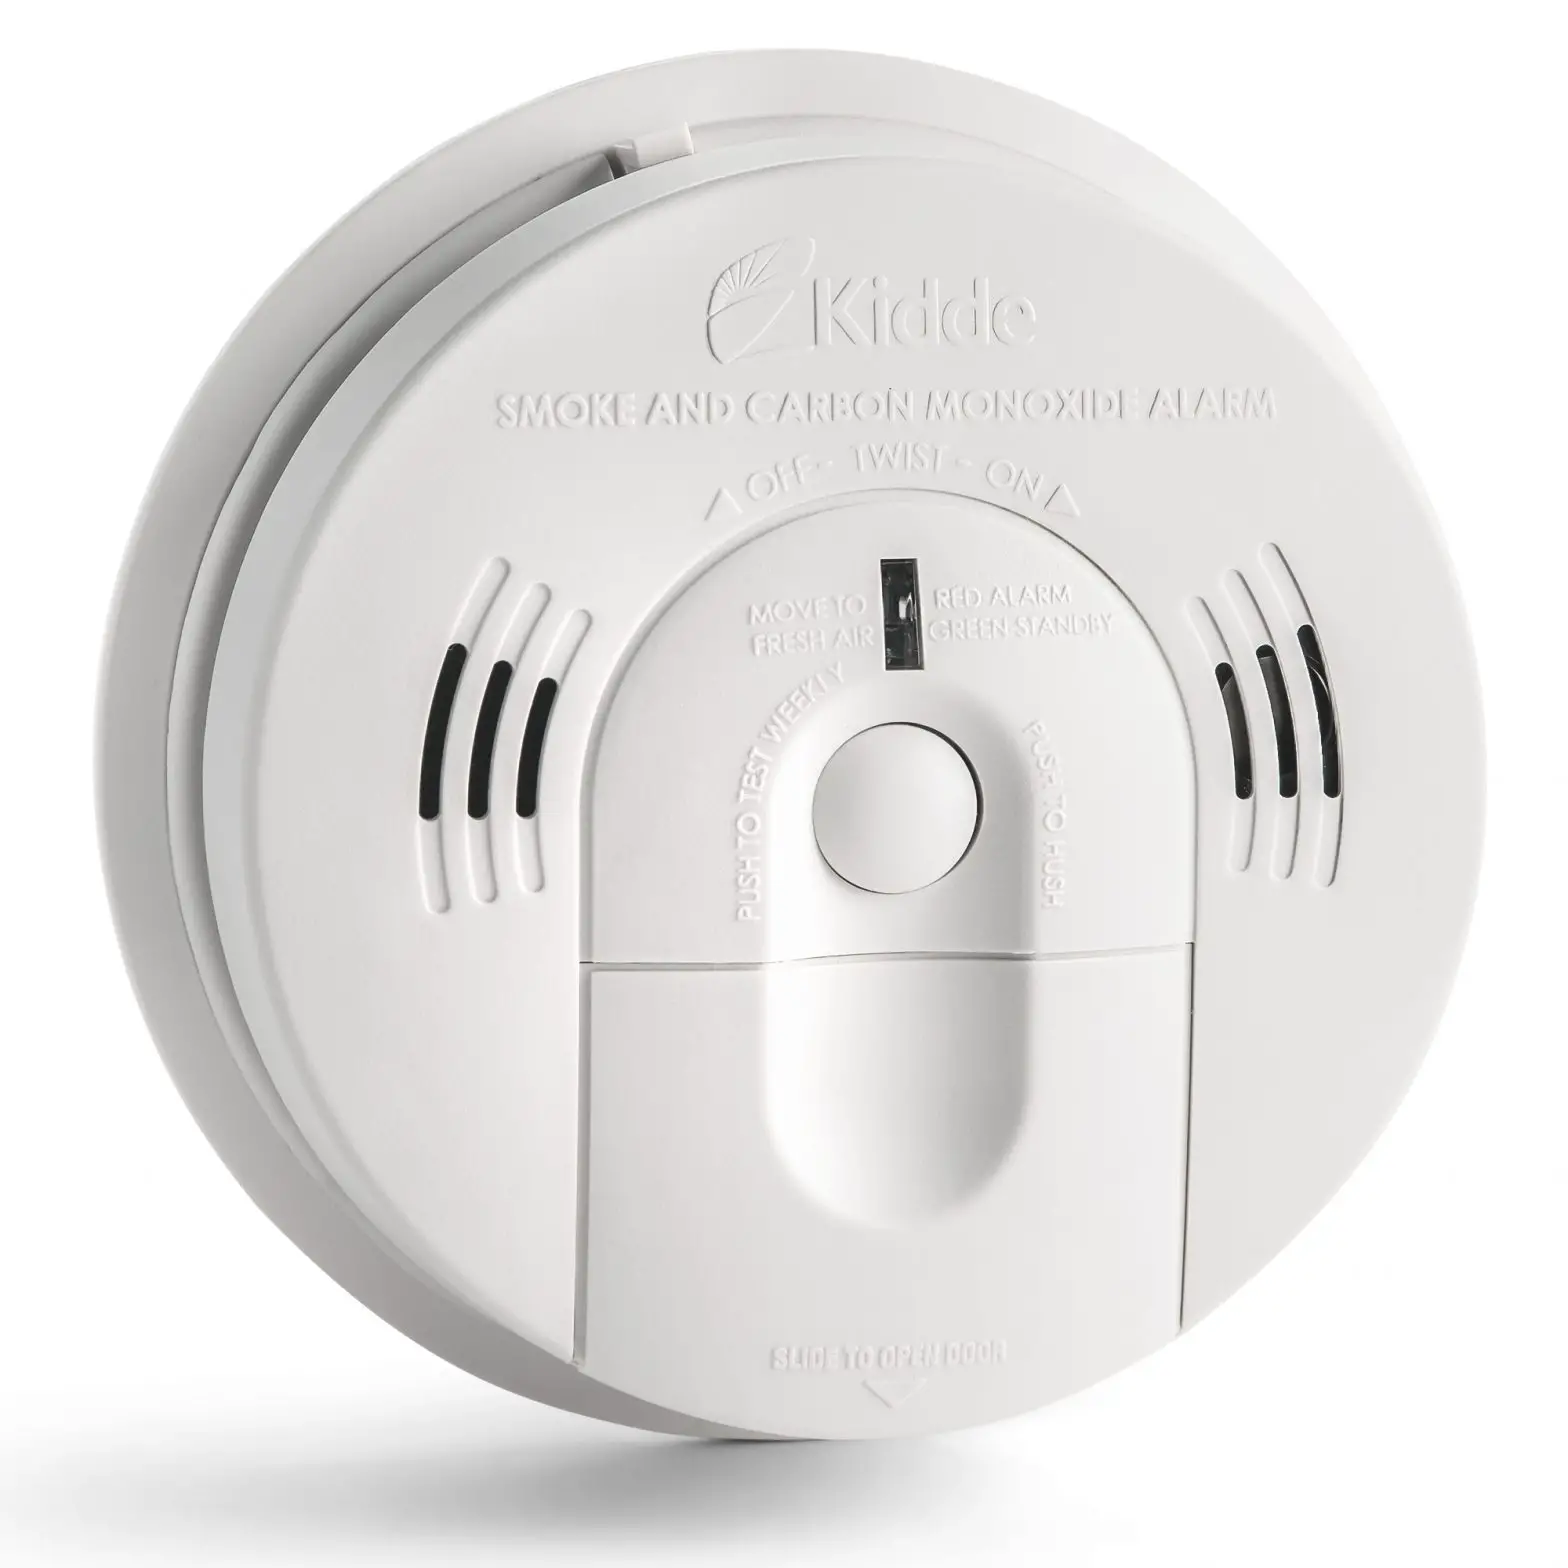 Kidde Smoke and Carbon Monoxide Alarm User Guide